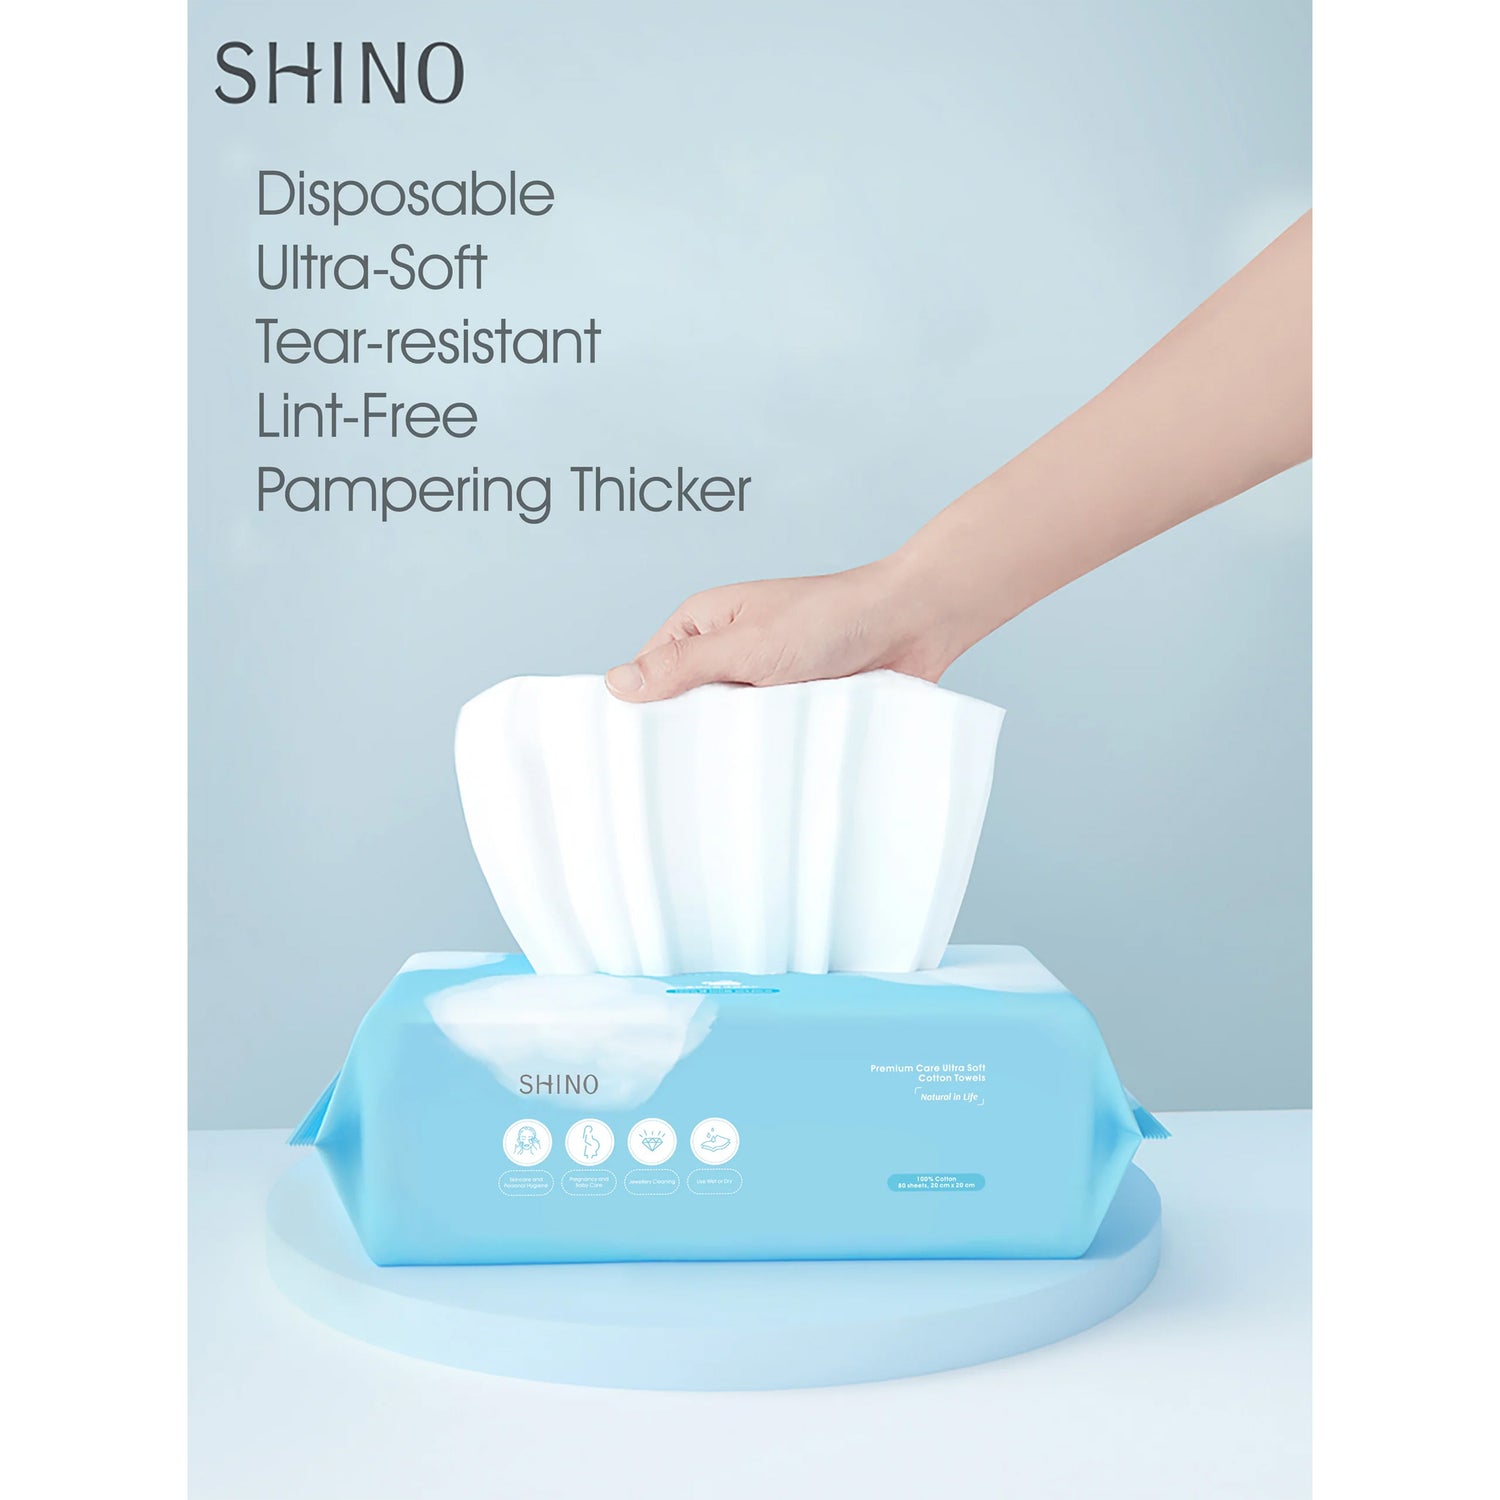 SHINO Premium Care Ultra Soft Cotton Towels 80pcs